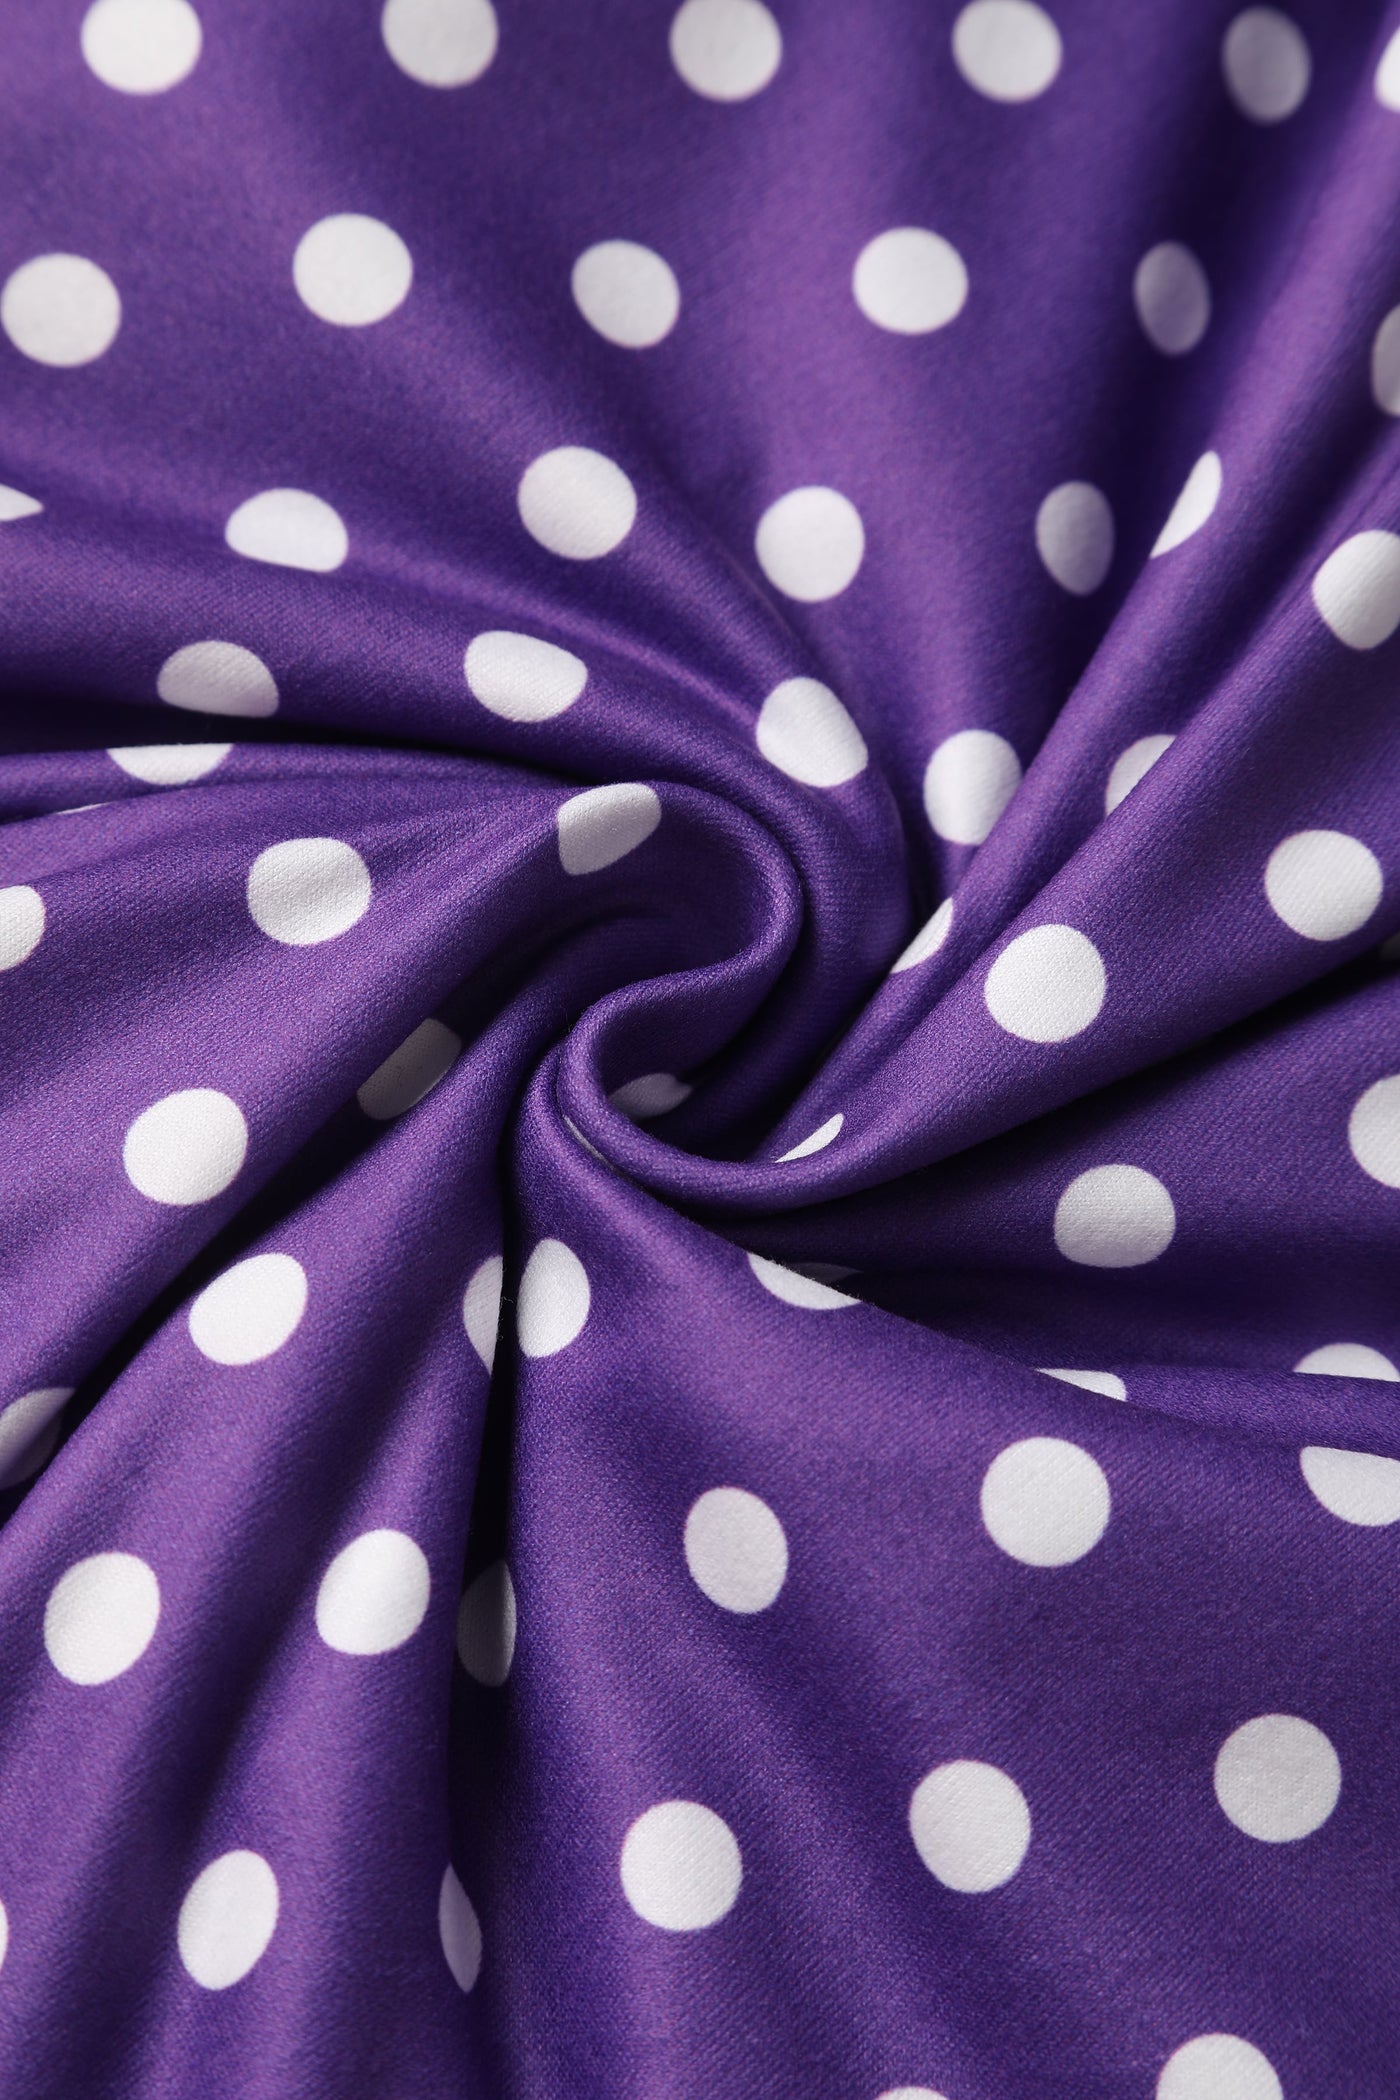 purple and white polka dot knit fabric